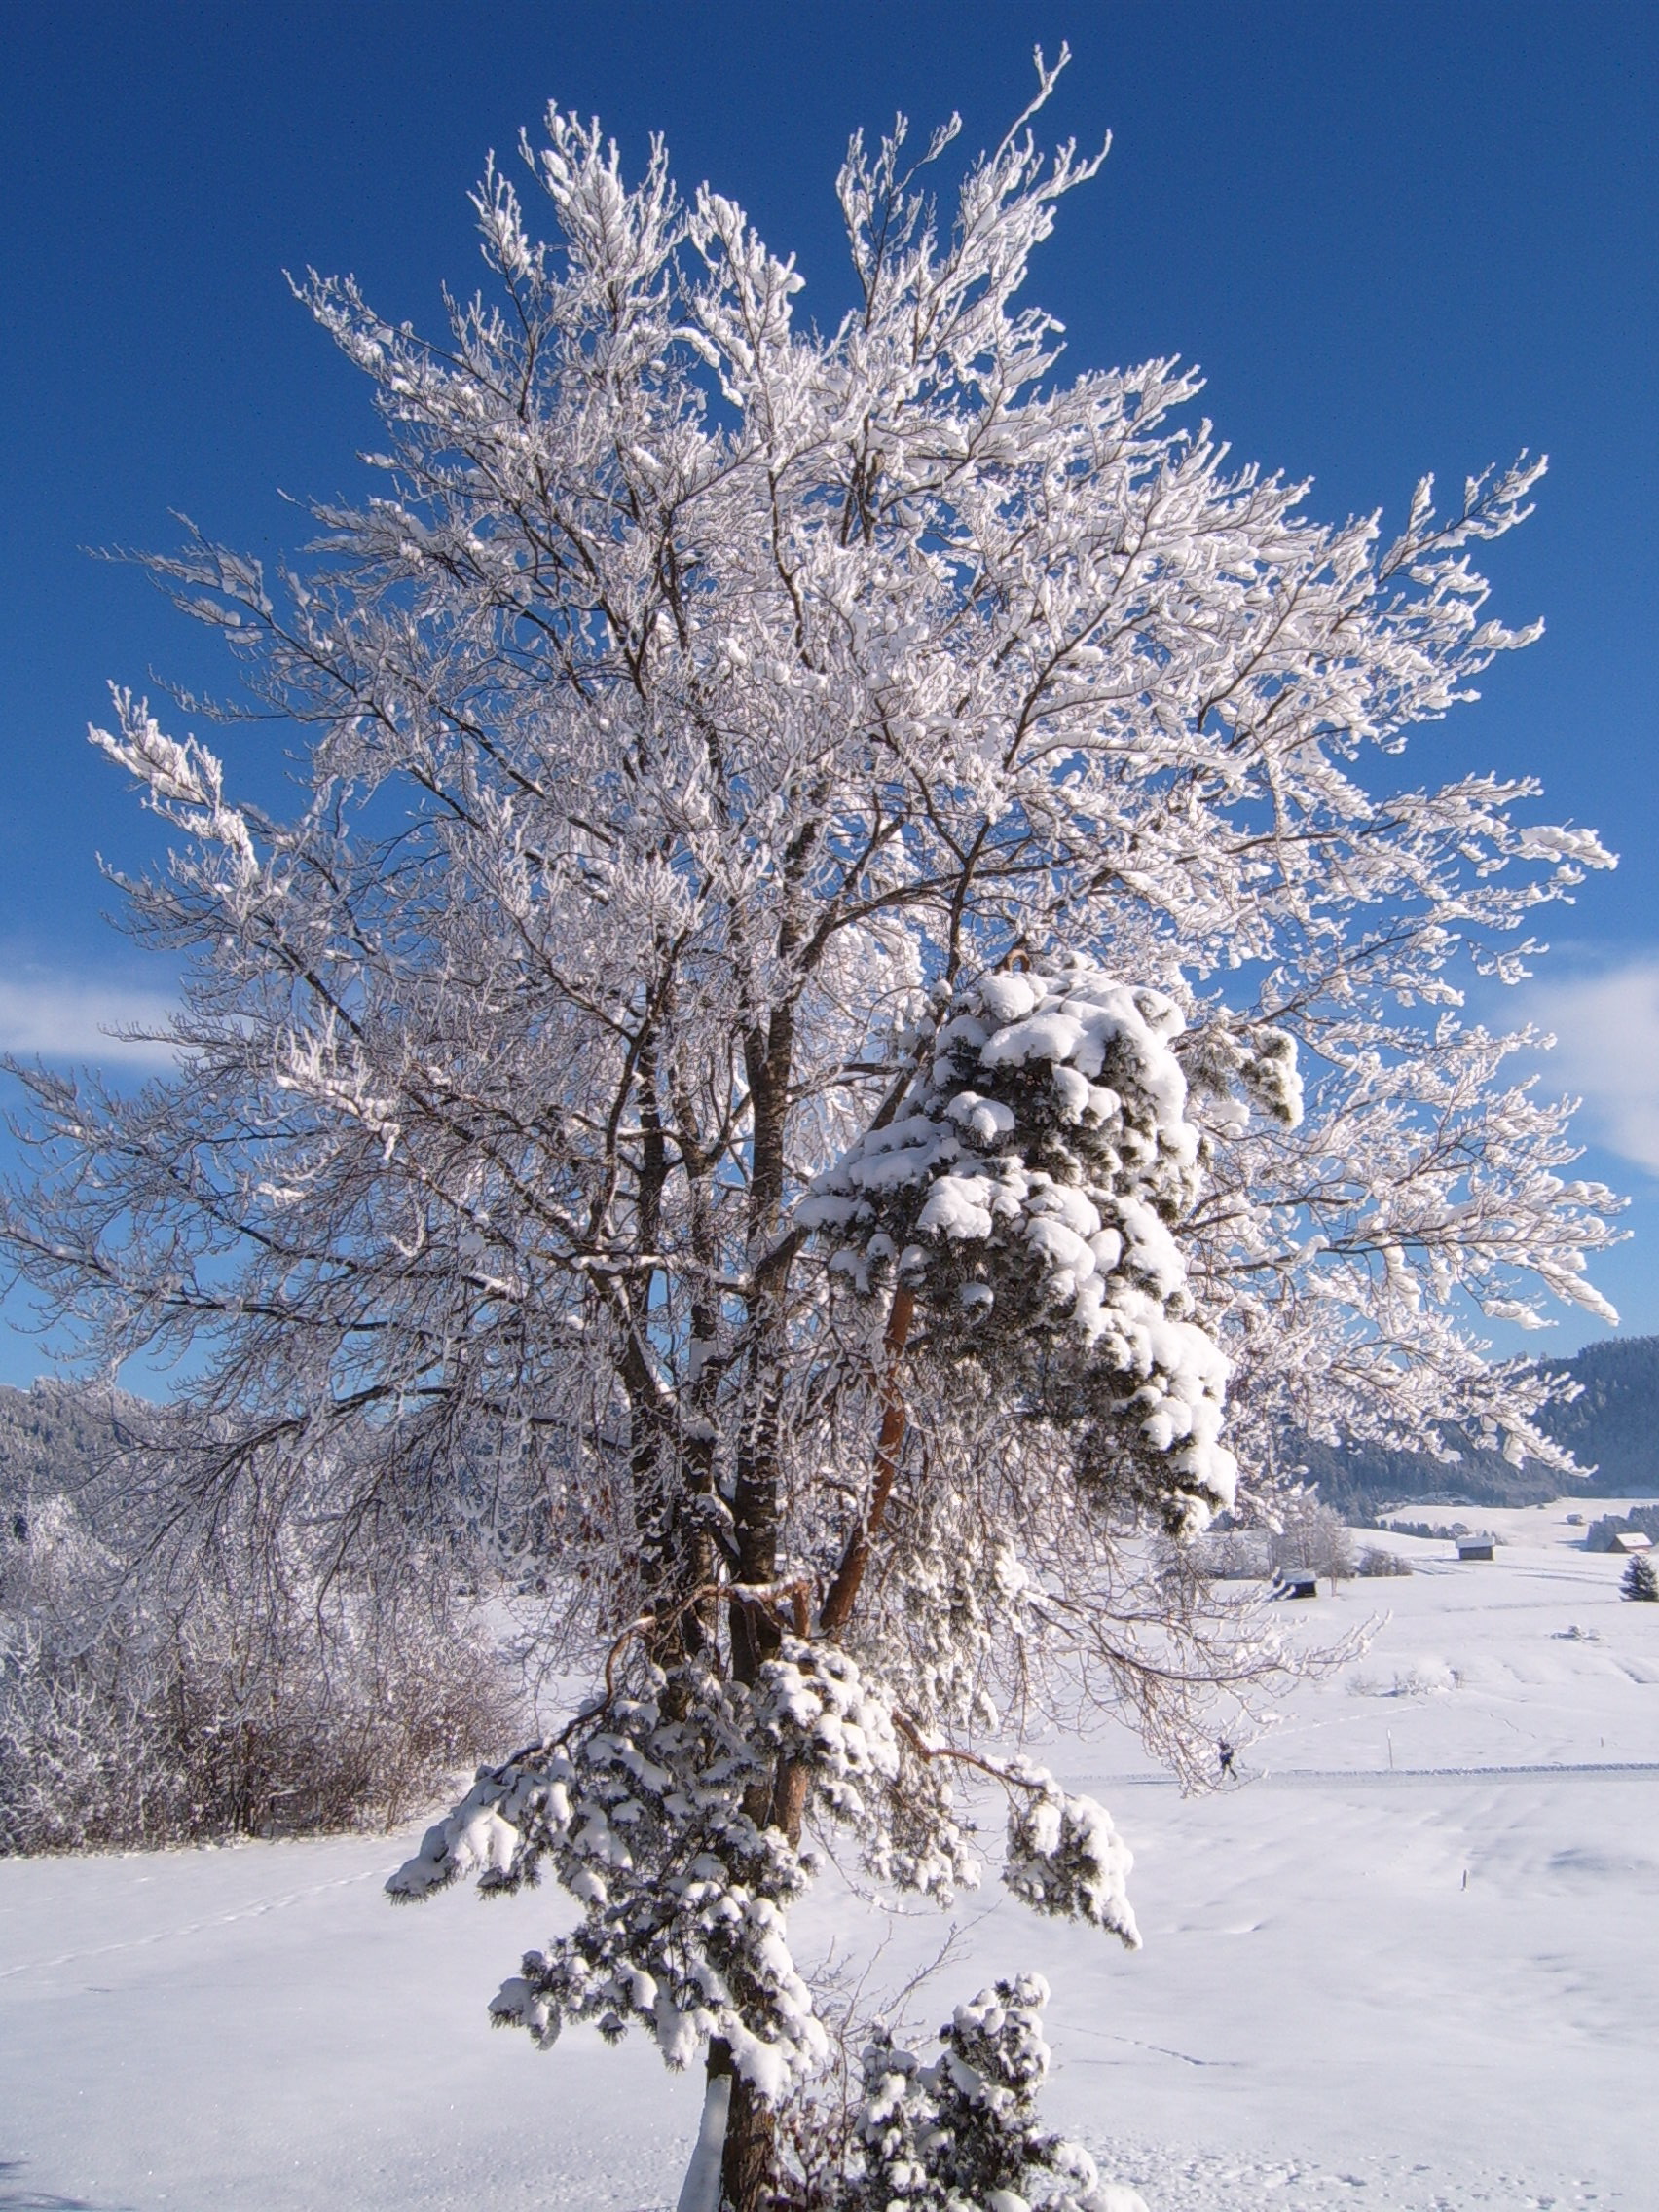 File:Winter tree.jpg - Wikimedia Commons